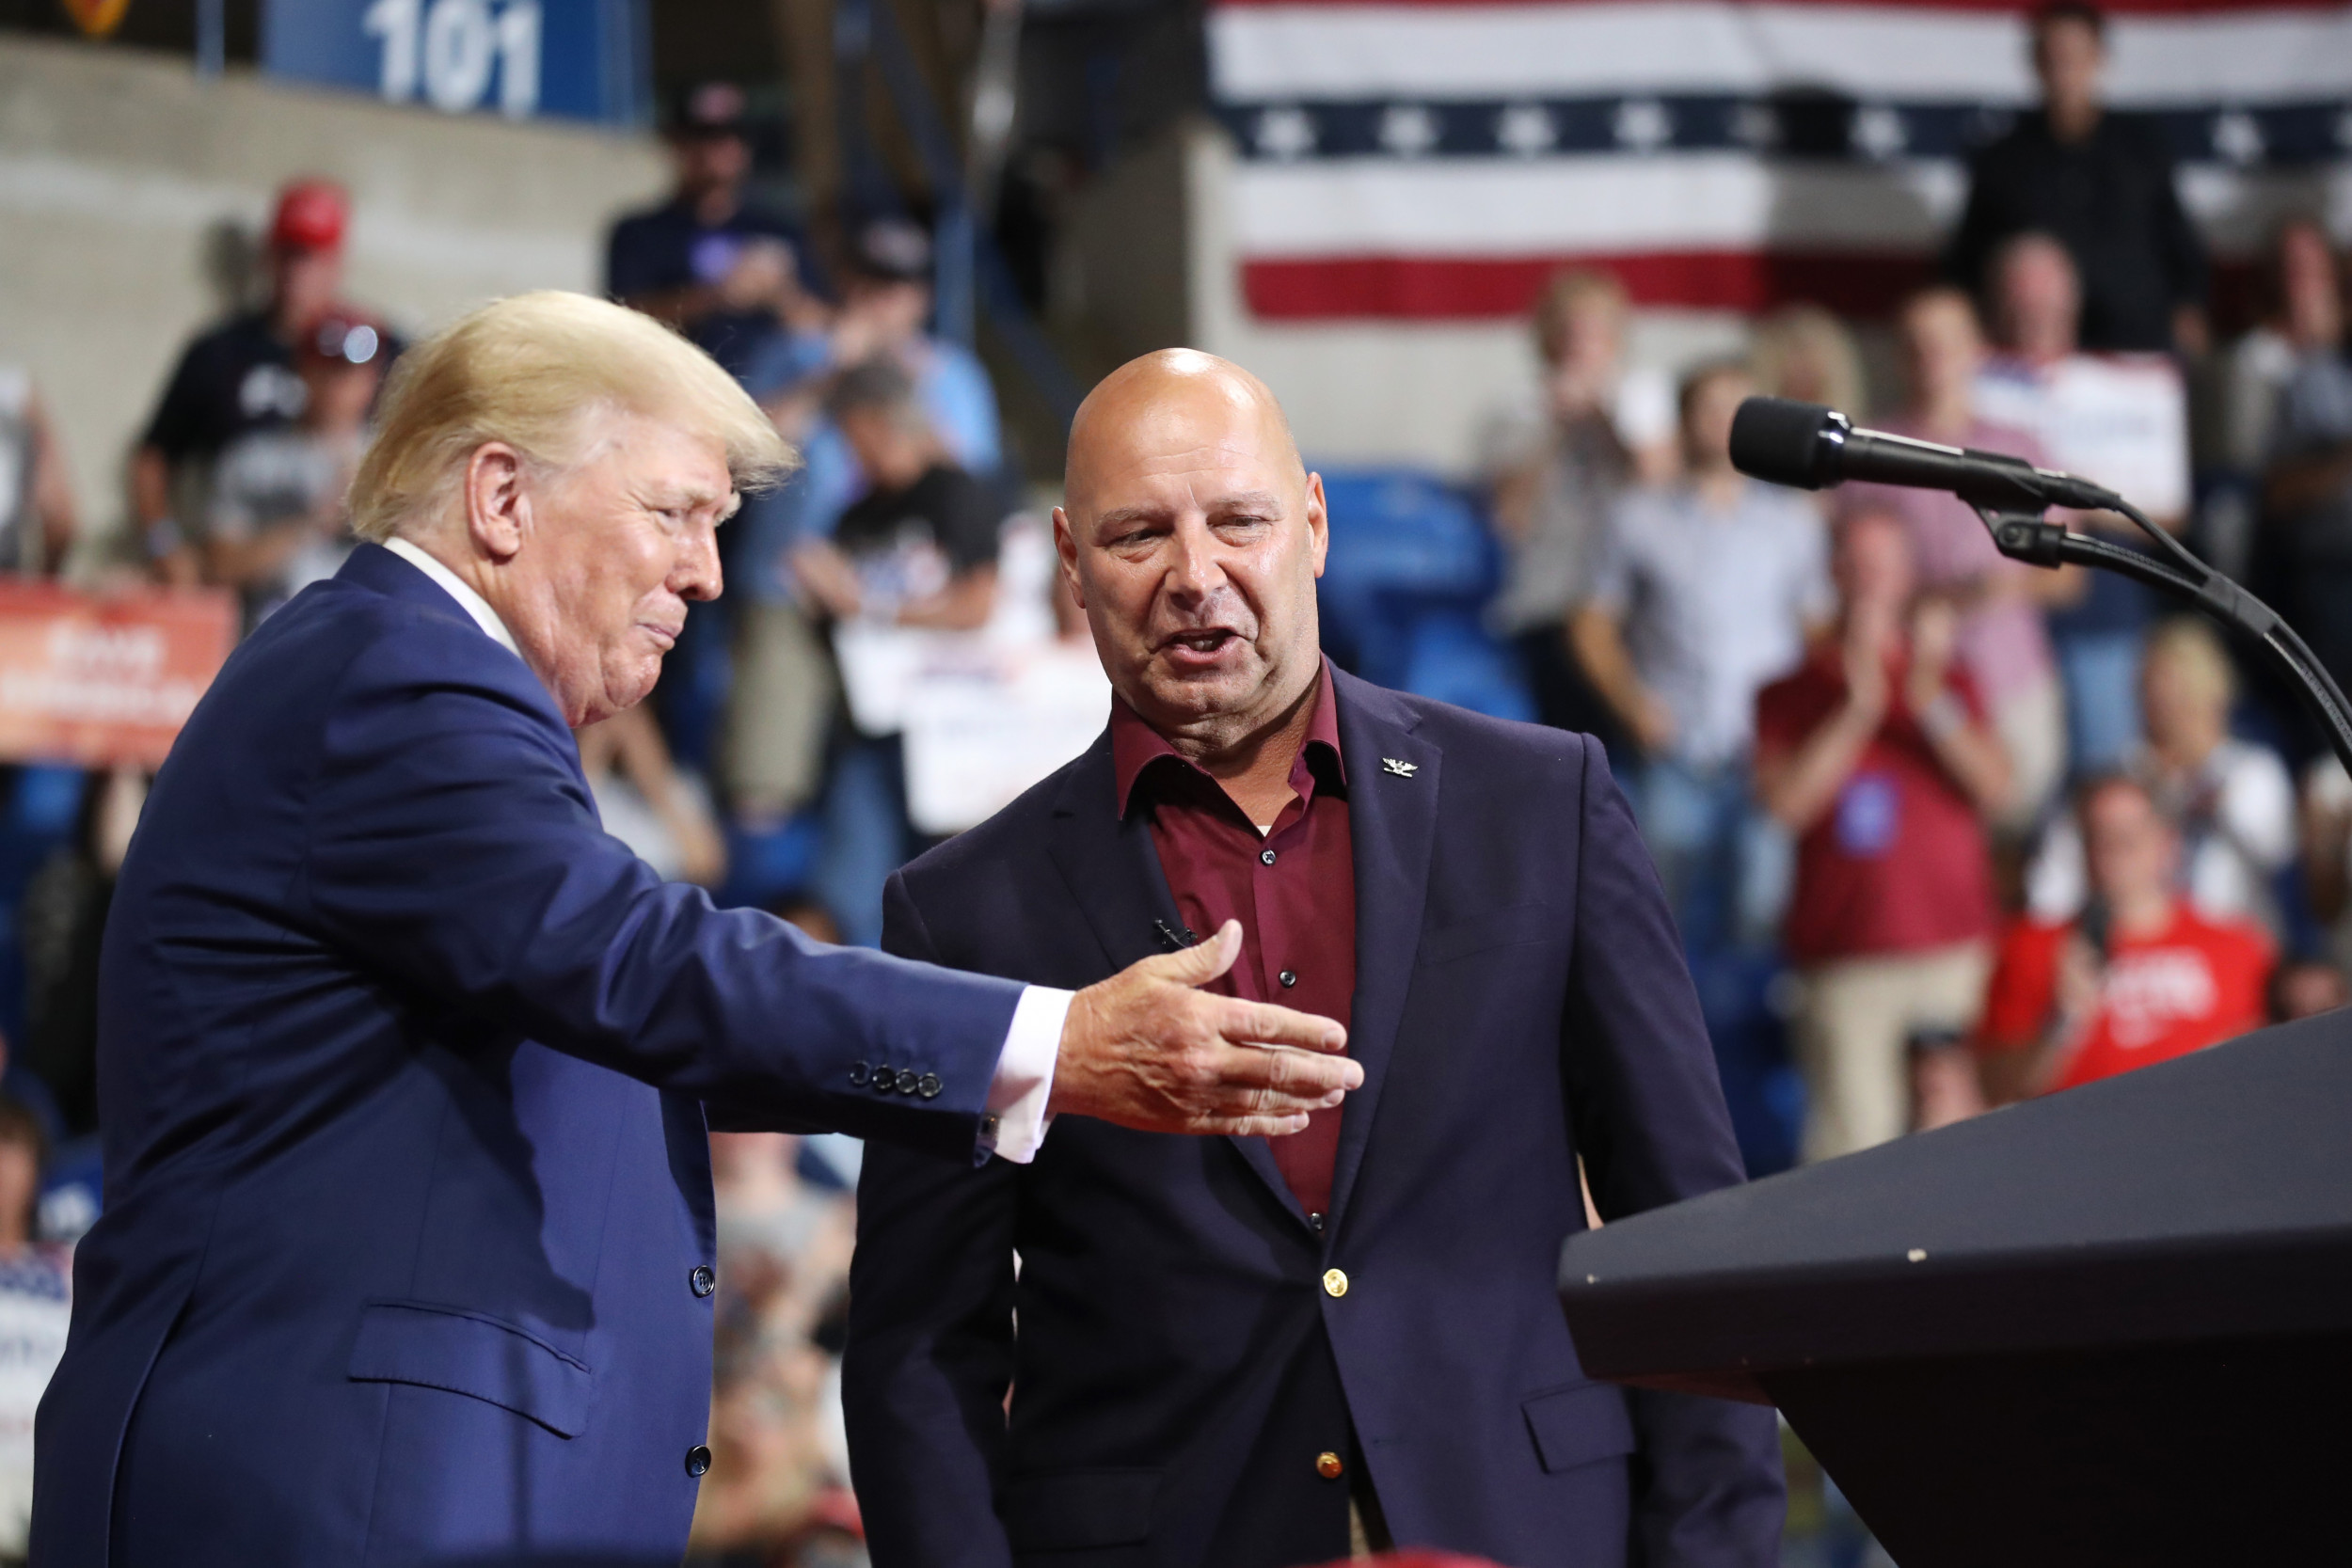 Trump rally in Pennsylvania was a “major gift” to Democrats: Ex-GOP rep